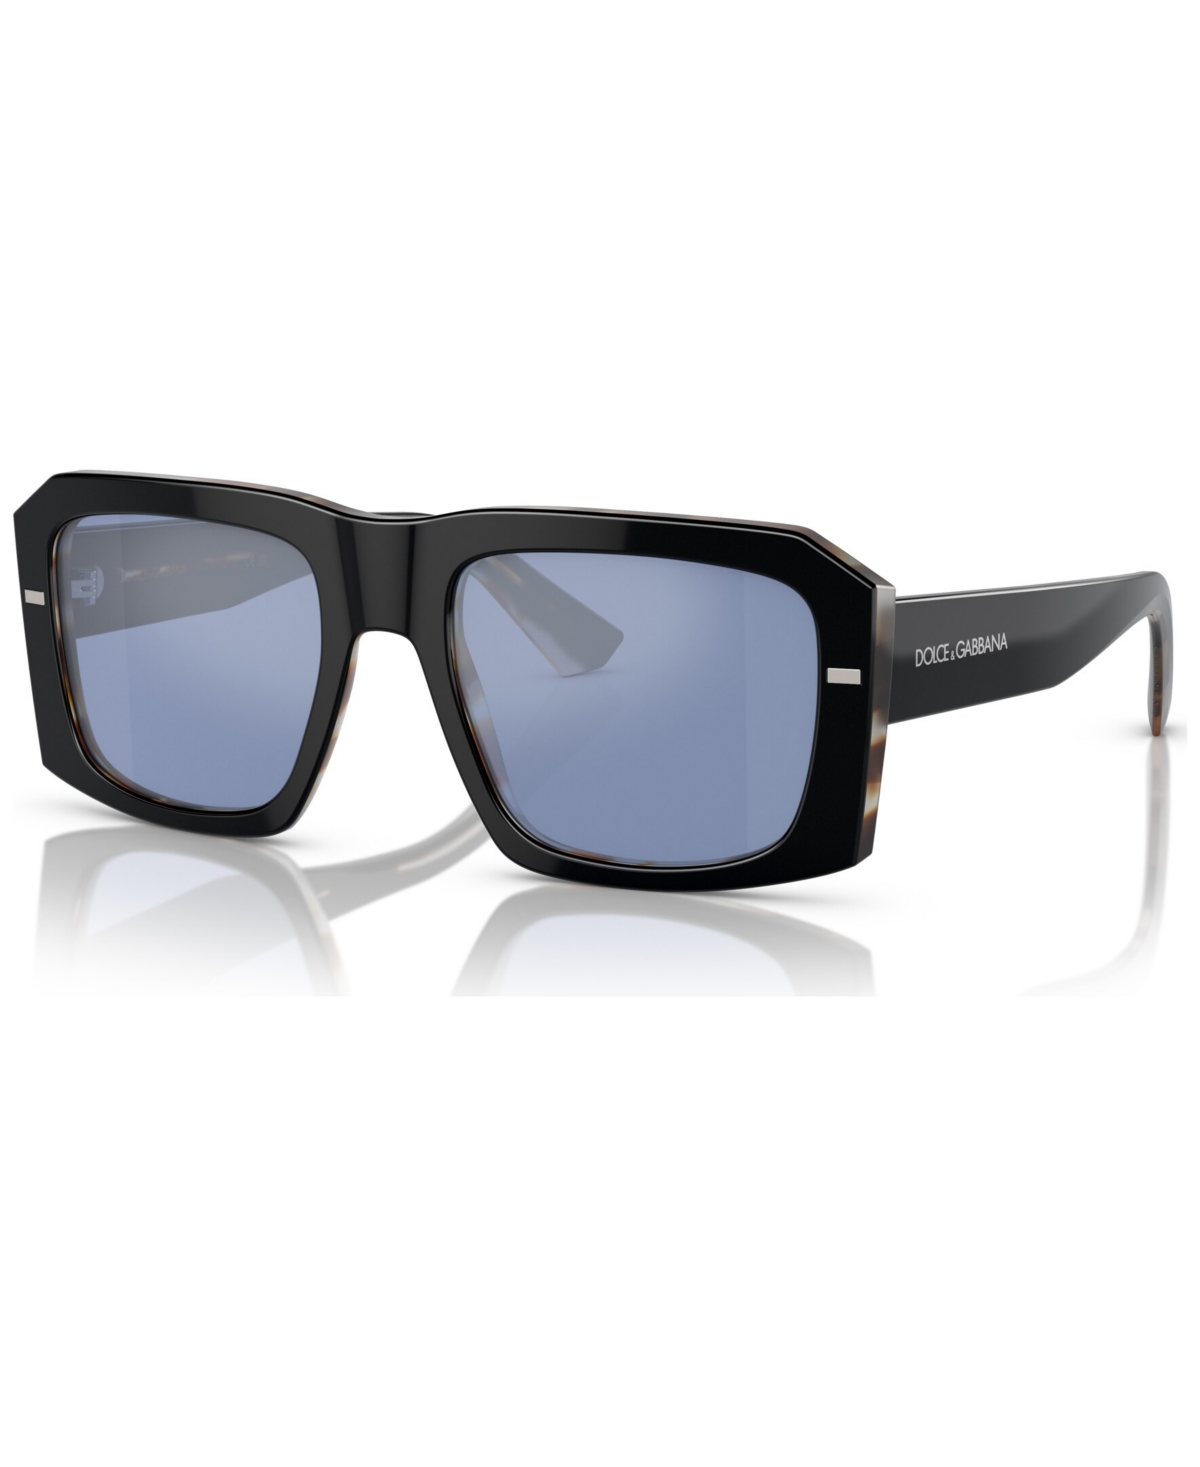 Dolce & Gabbana Men's Sunglasses, Dg4430 In Black On Gray Havana